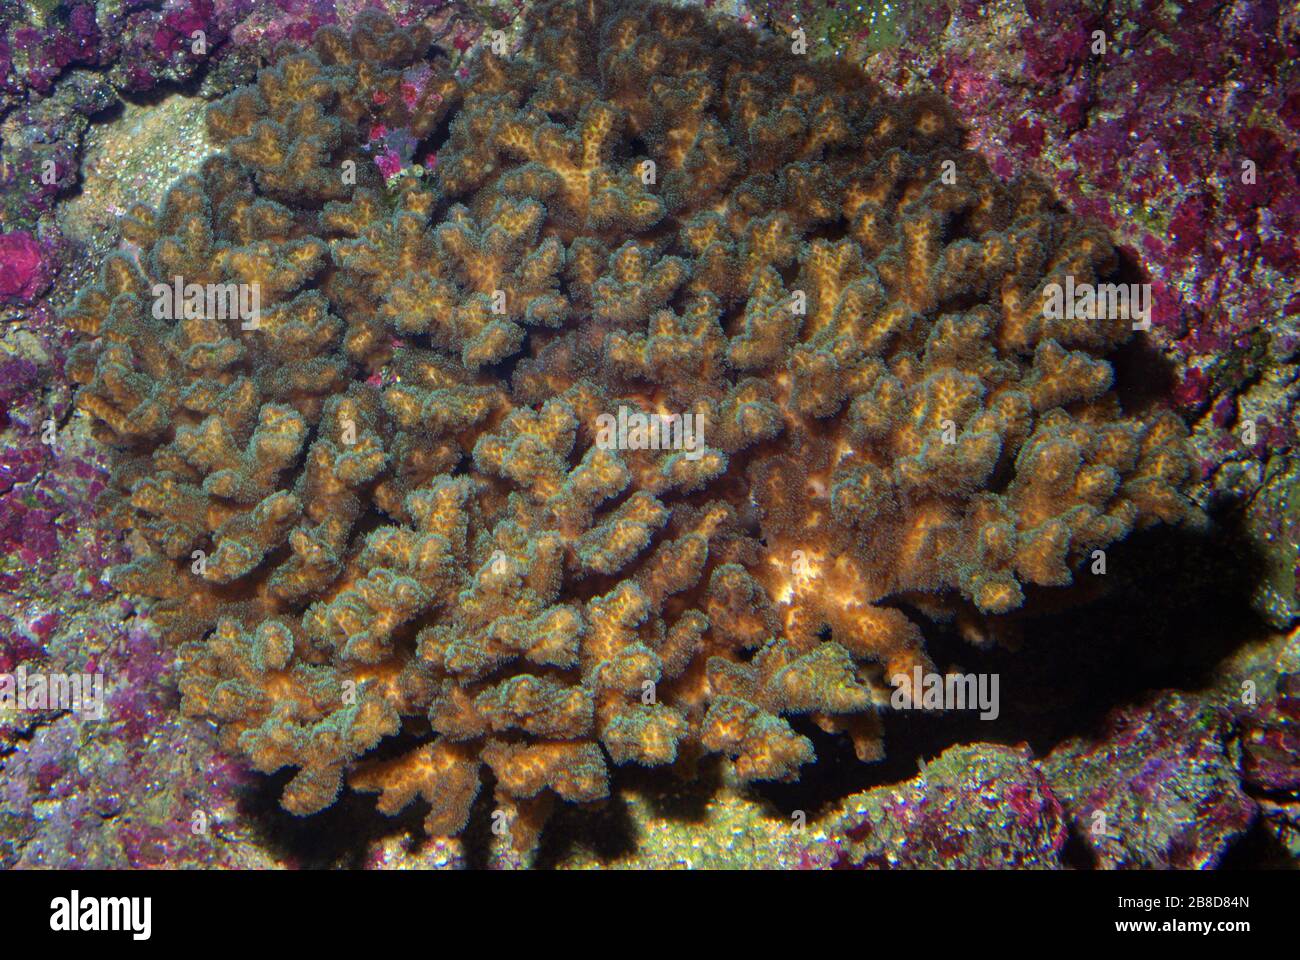 Cauliflower or Lace coral, Pocillopora damicornis Stock Photo